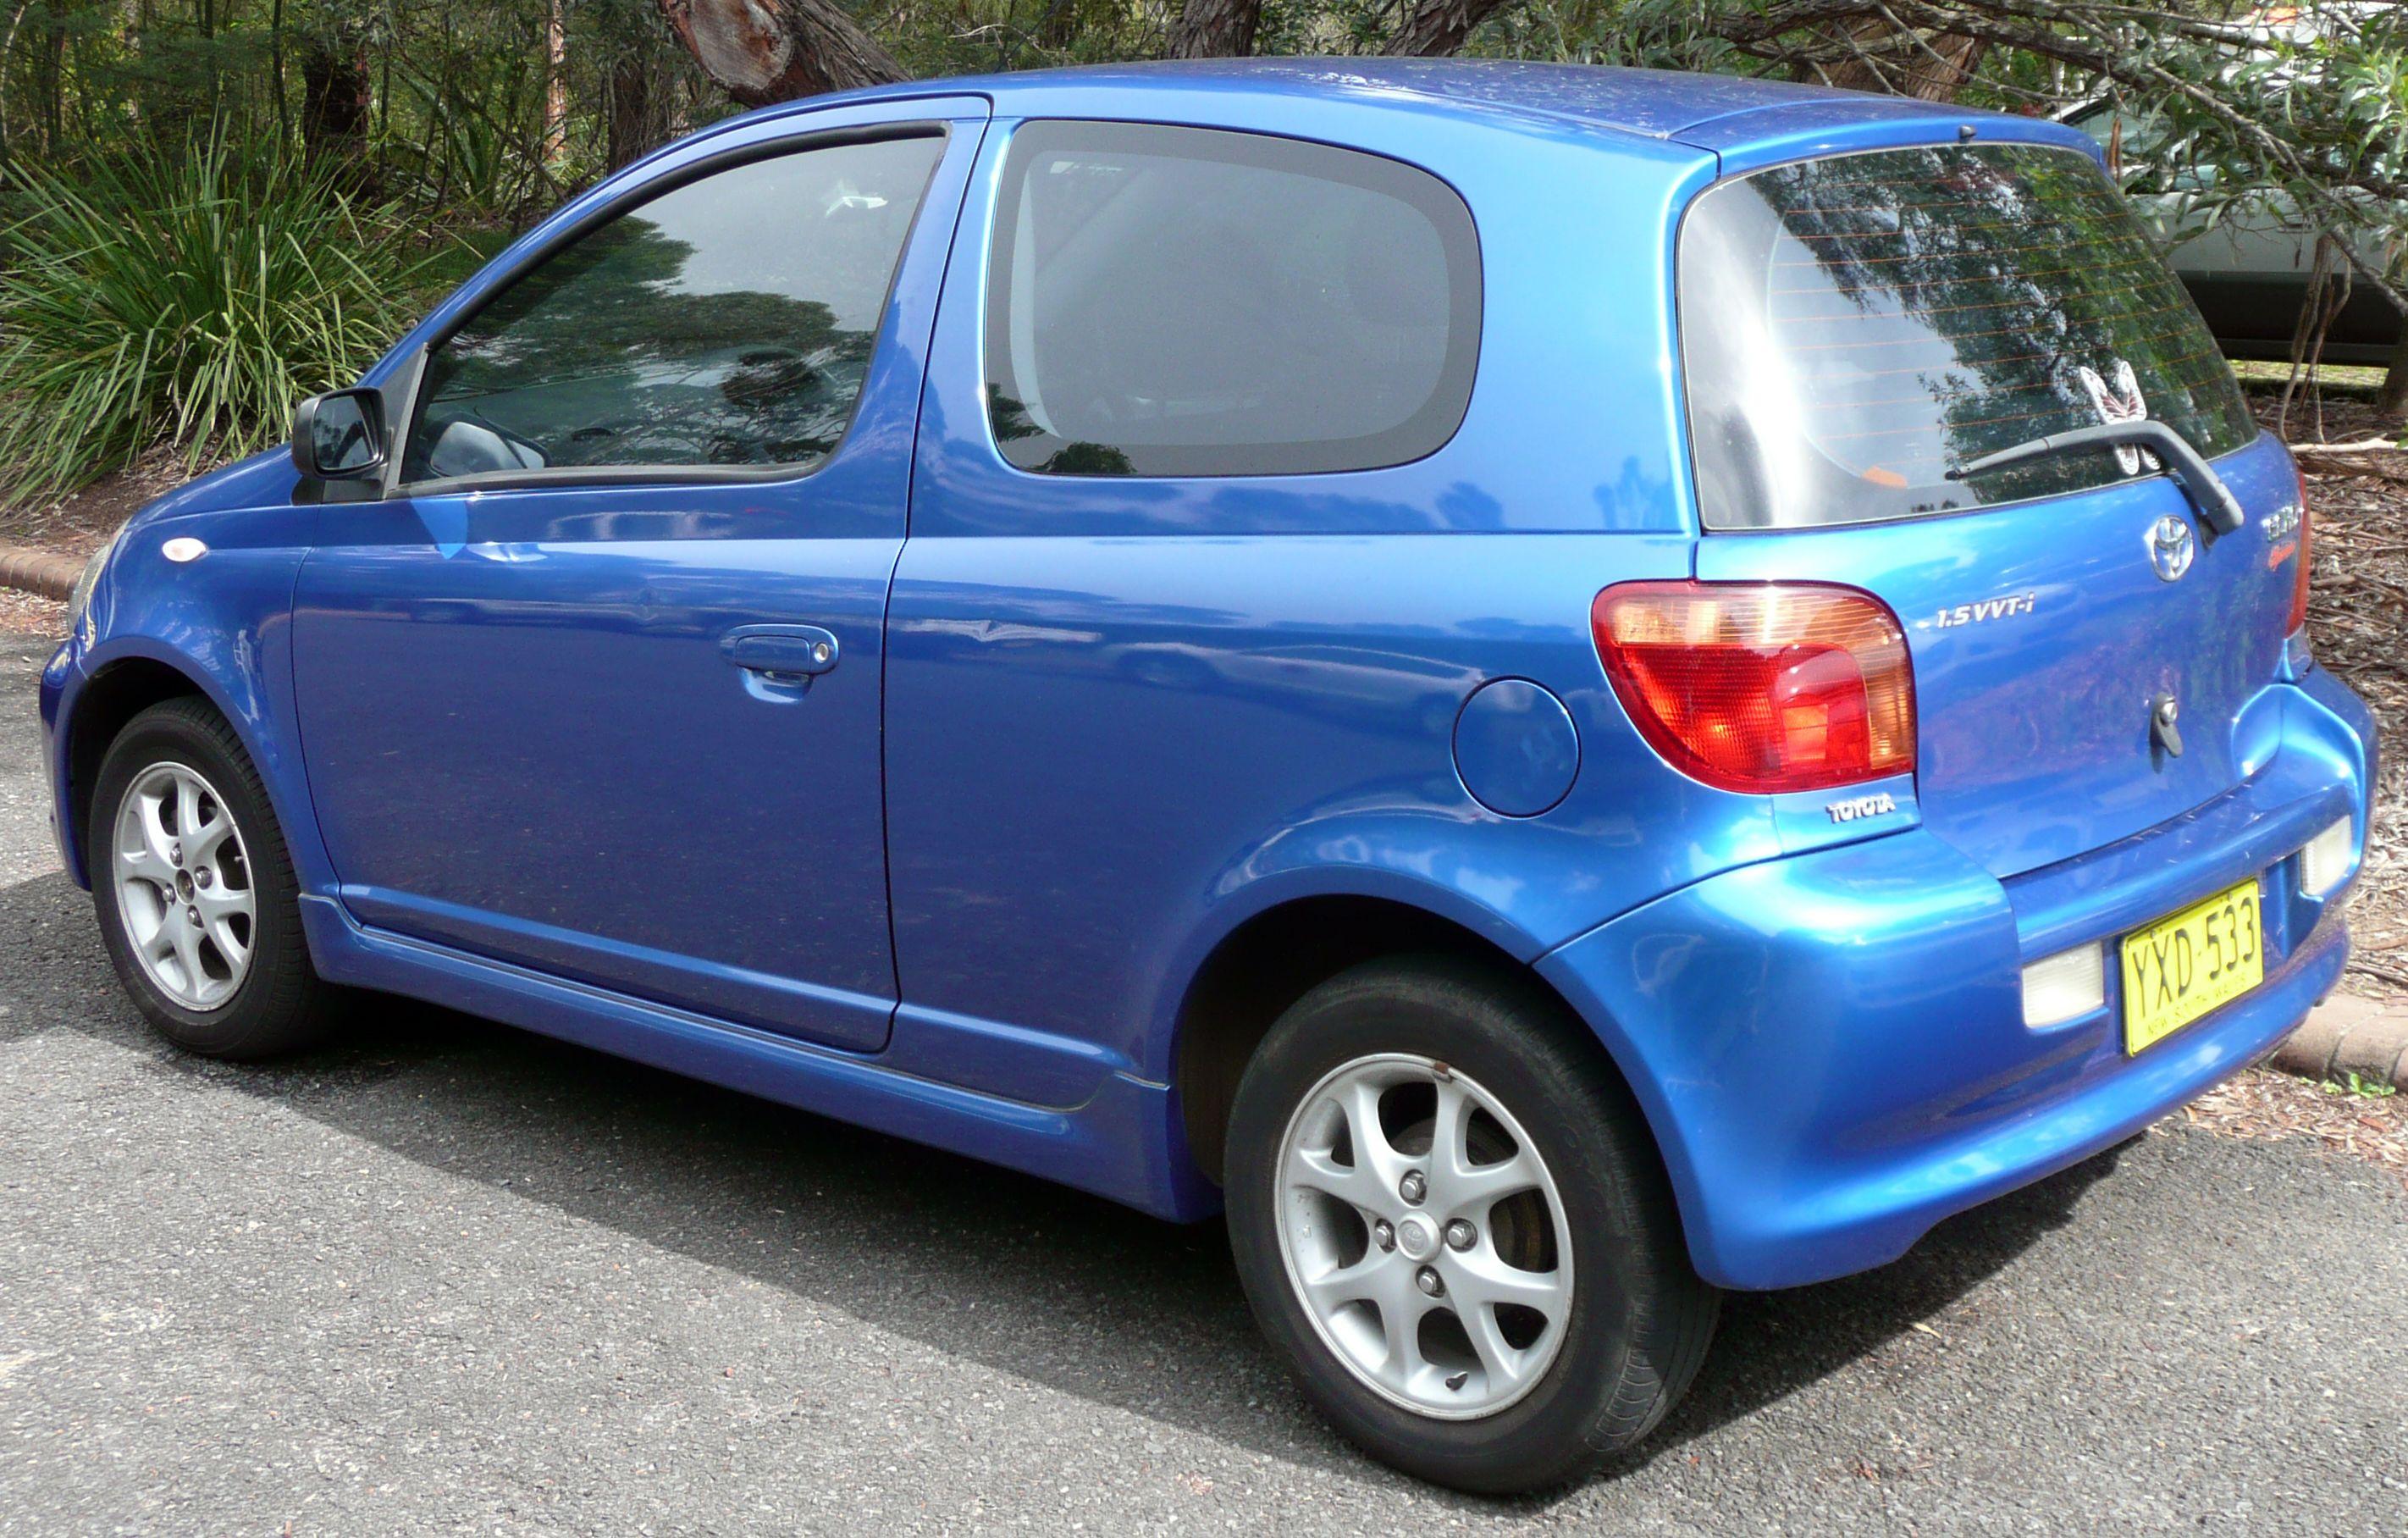 2002 Blue Toyota Logo - 2001 2002 Toyota Echo (NCP13R) Sportivo 3 Door Hatchback